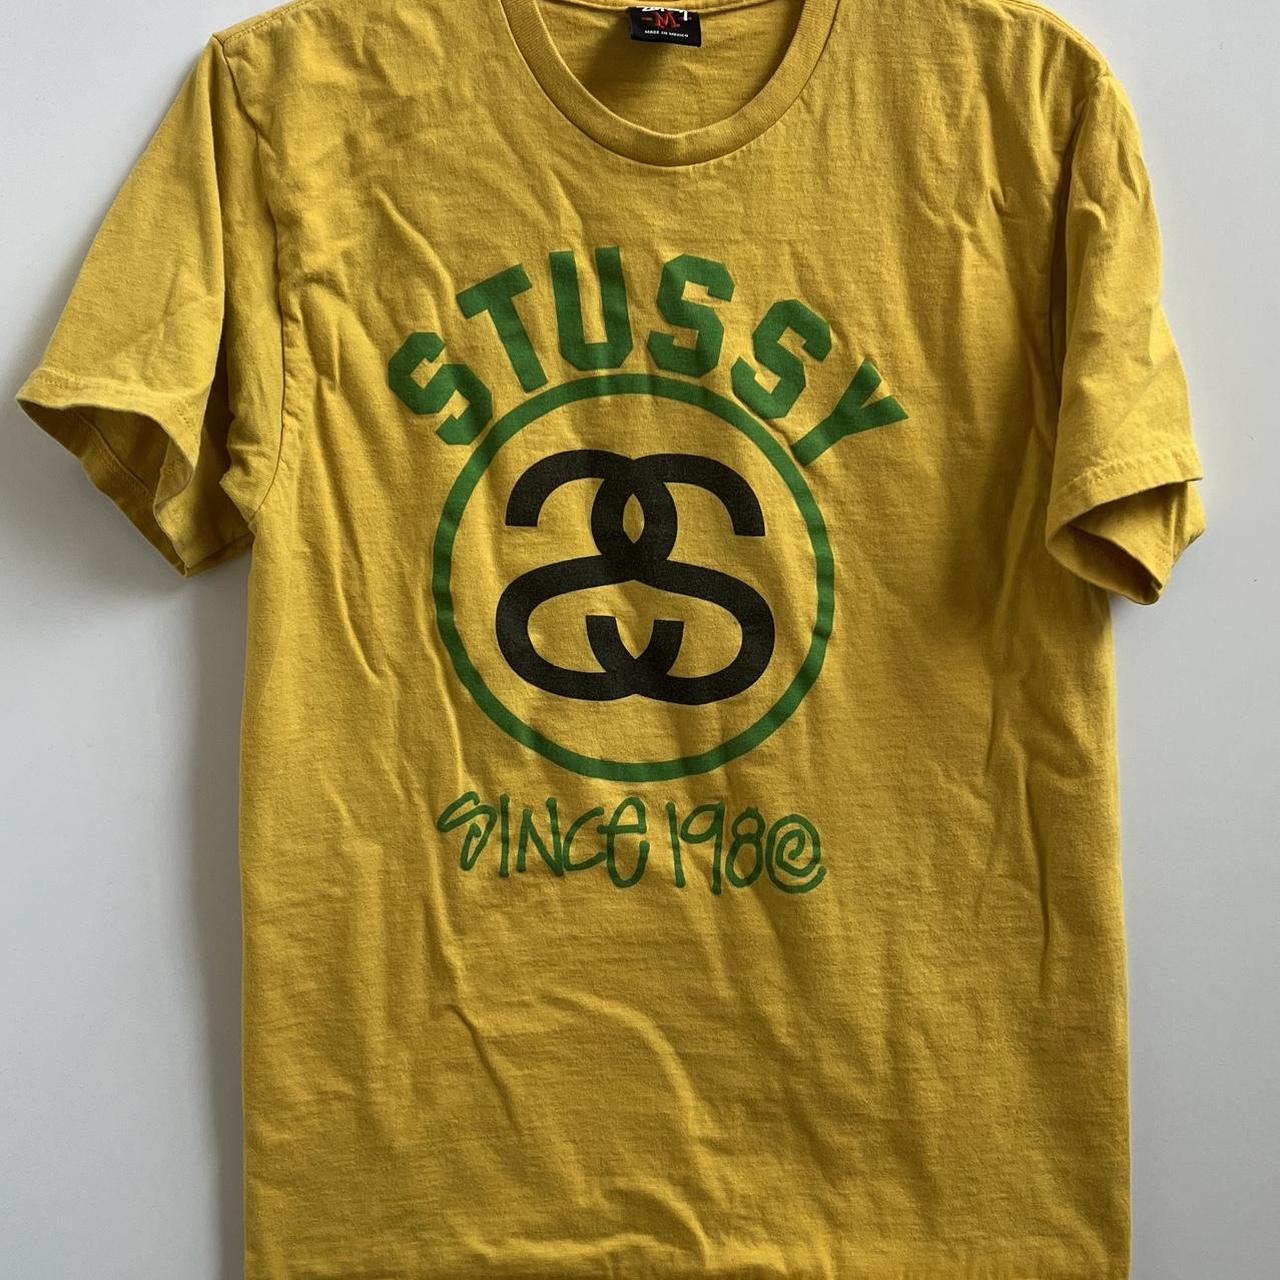 Stüssy Men's T-Shirt - Green - M